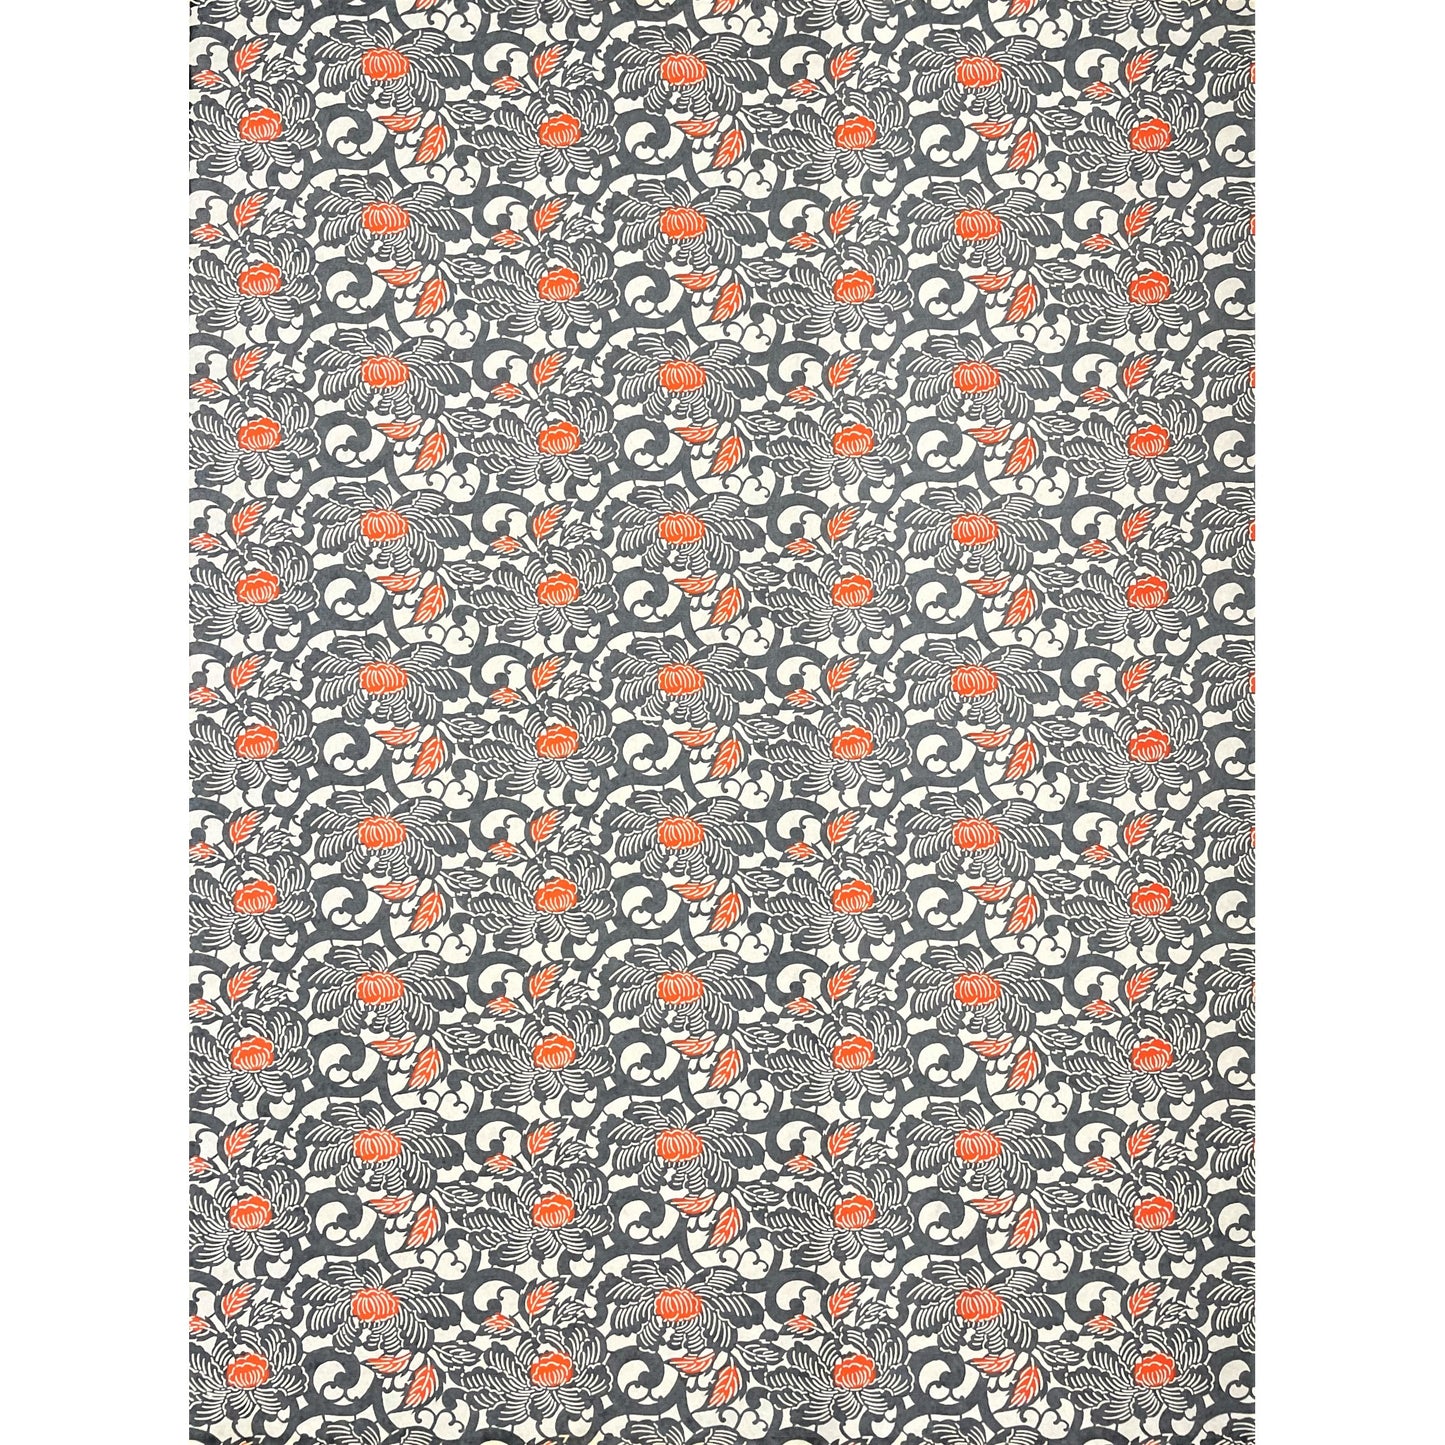 japanese silk-screen handmade paper showing grey and orange peony flower repeat pattern, full sheet view